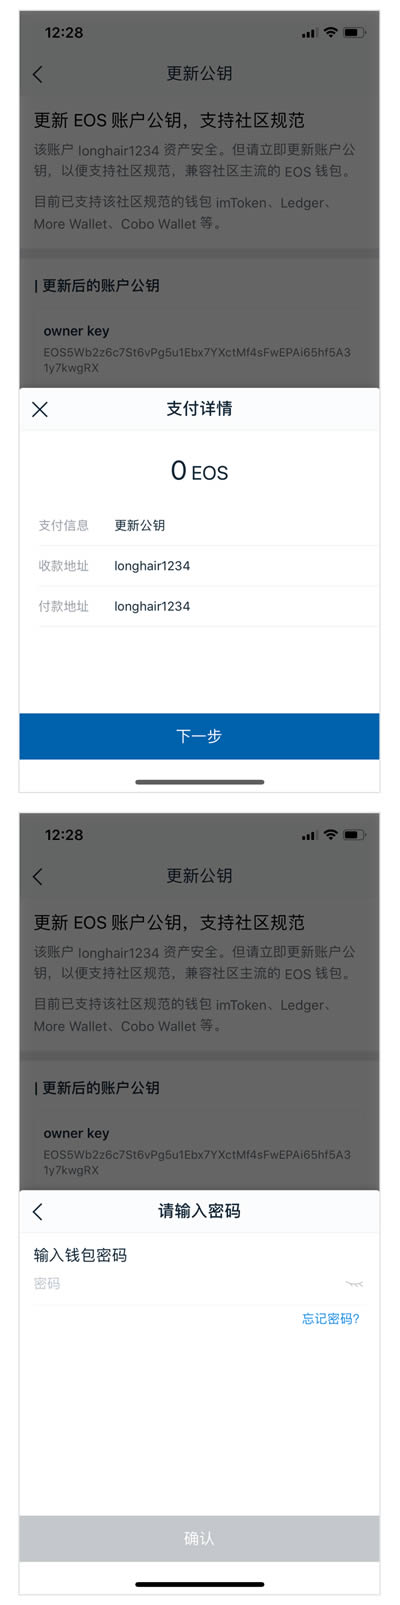 imToken钱包如何更新EOS账户公钥?